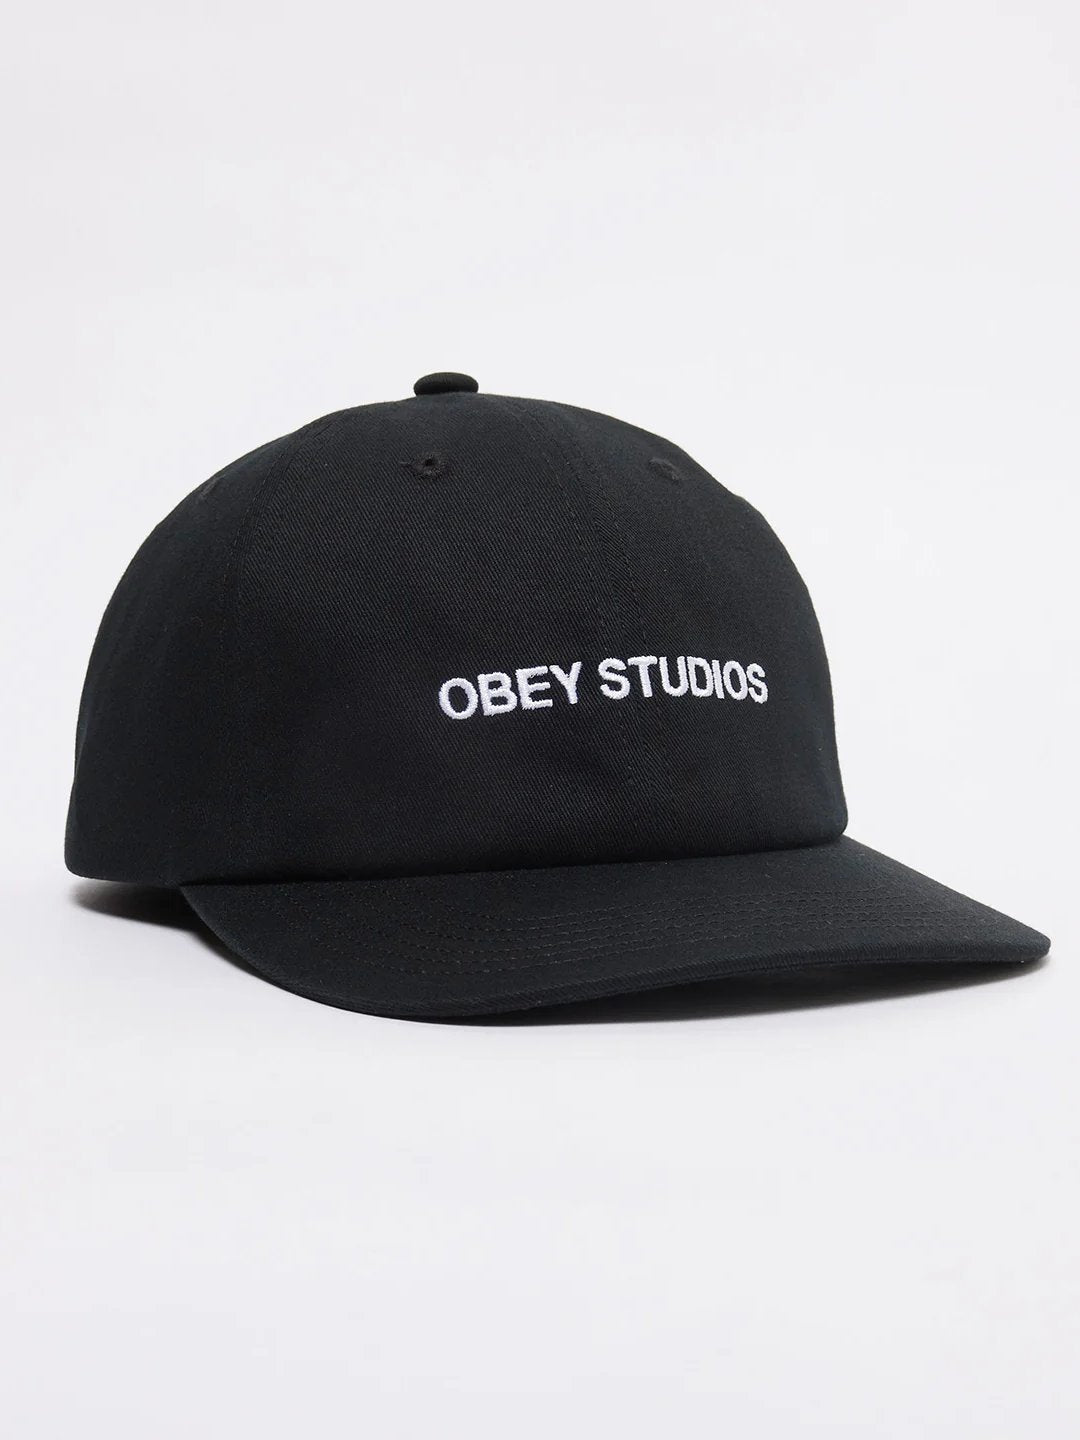 OBEY STUDIOS STRAP BACK HAT BLACK